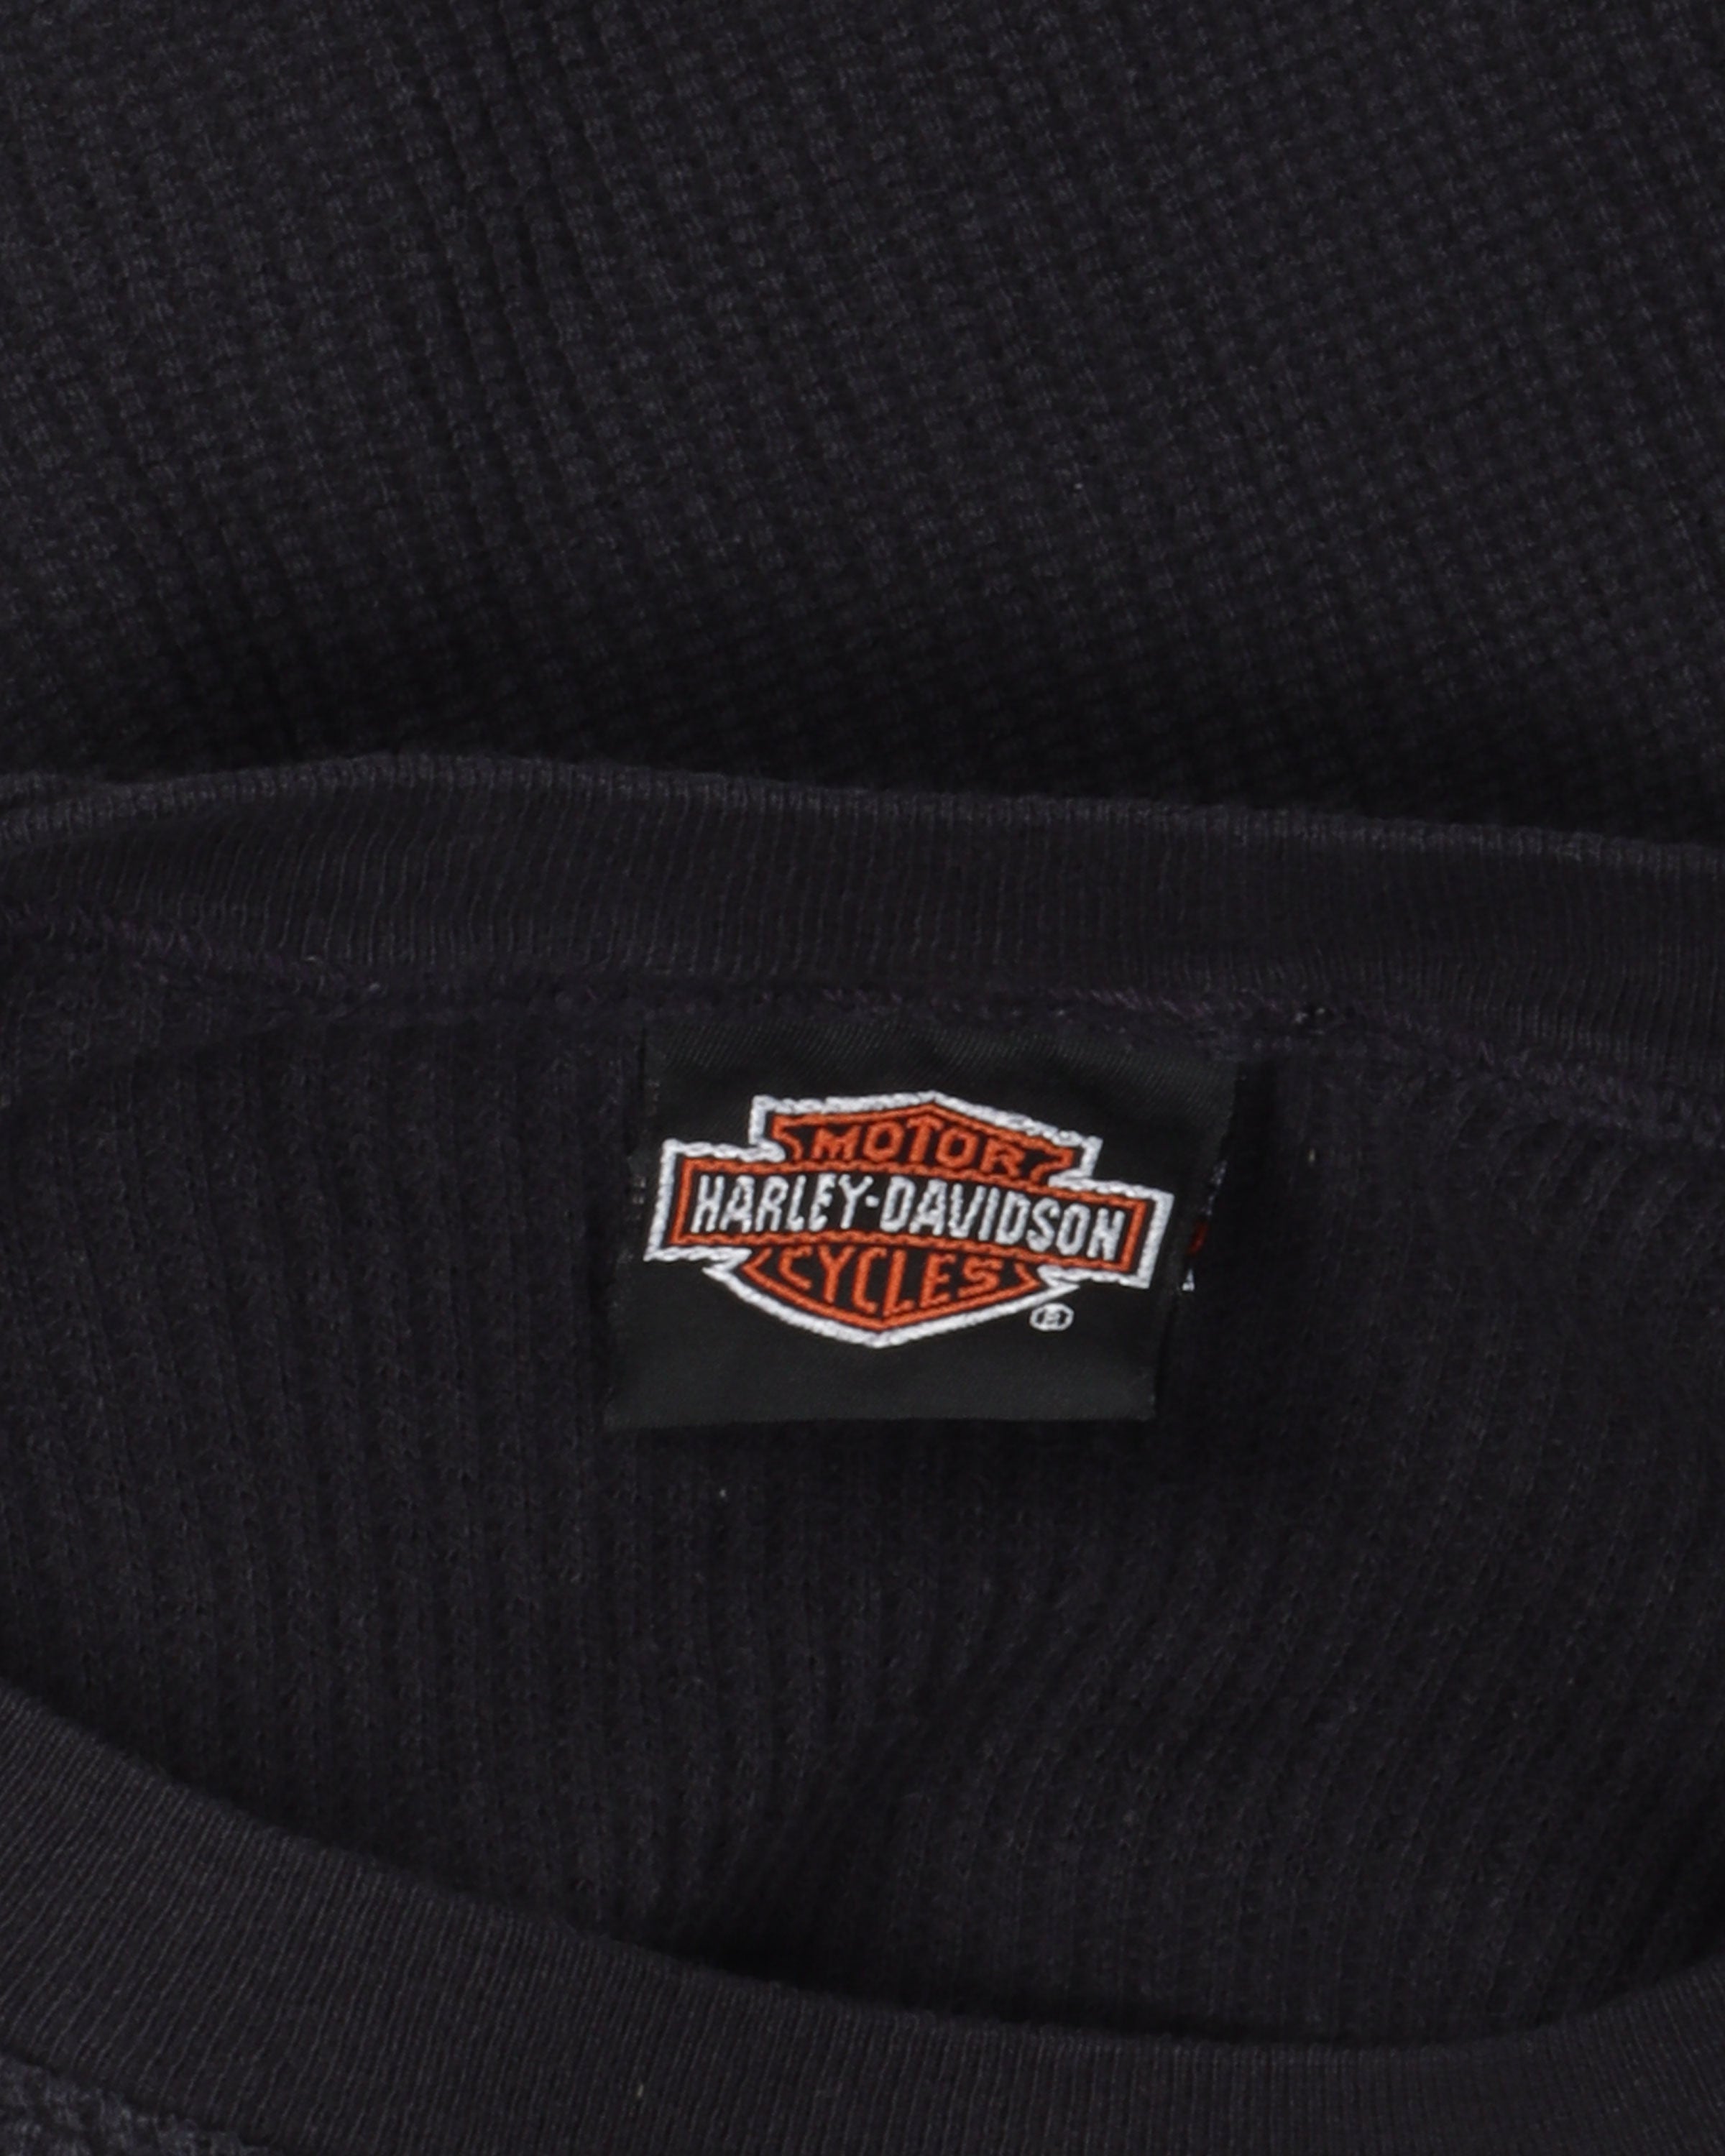 Harley Davidson Sturgis Thermal Long Sleeve Shirt